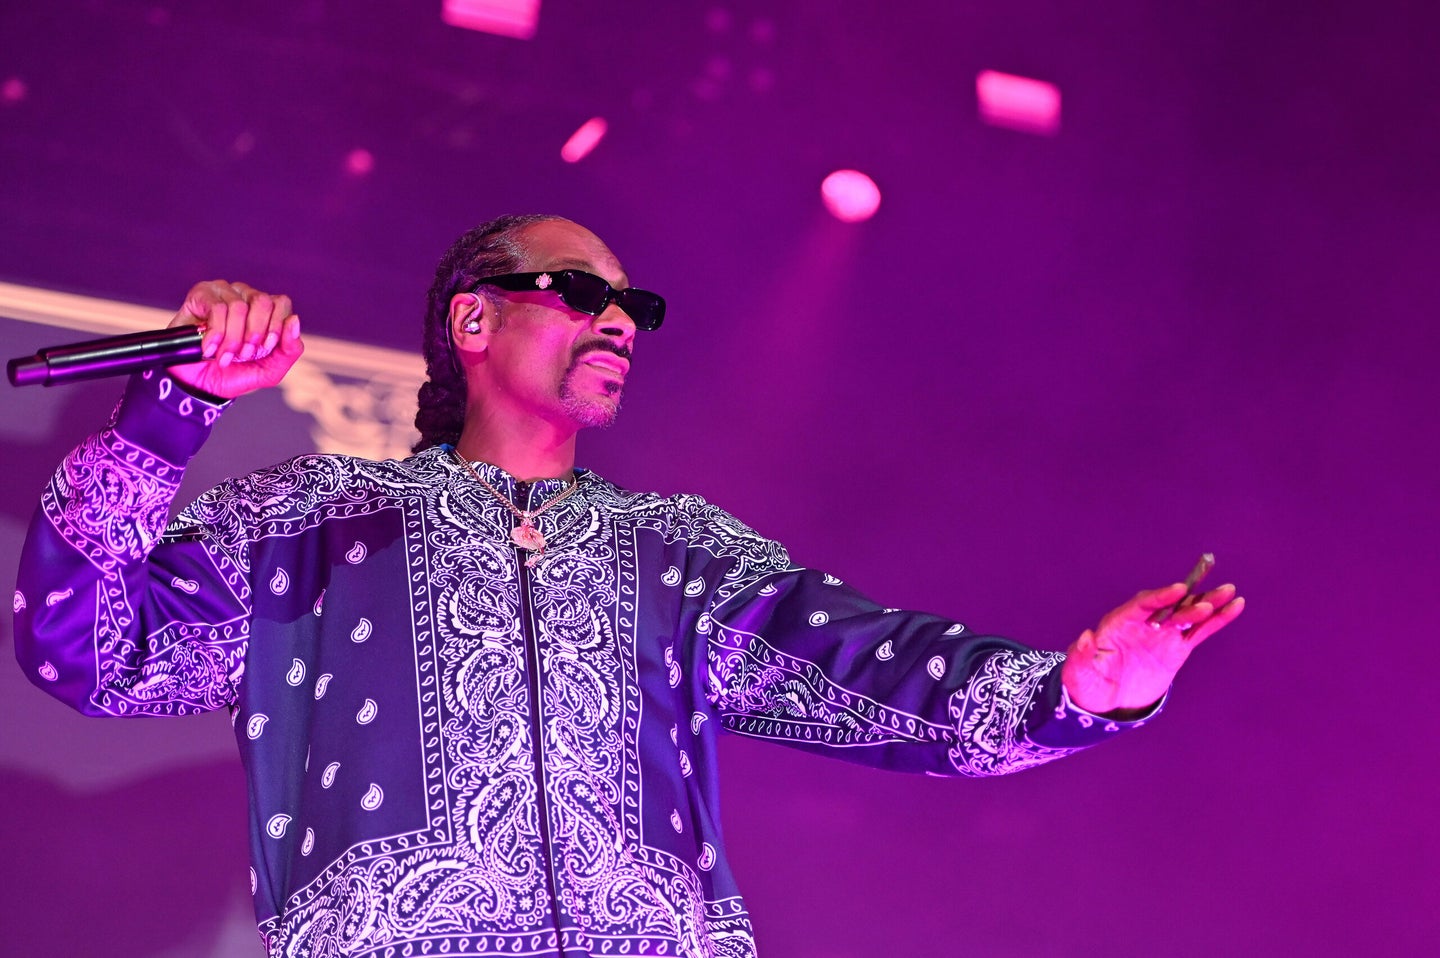 Snoop Dogg on stage under purple lights.